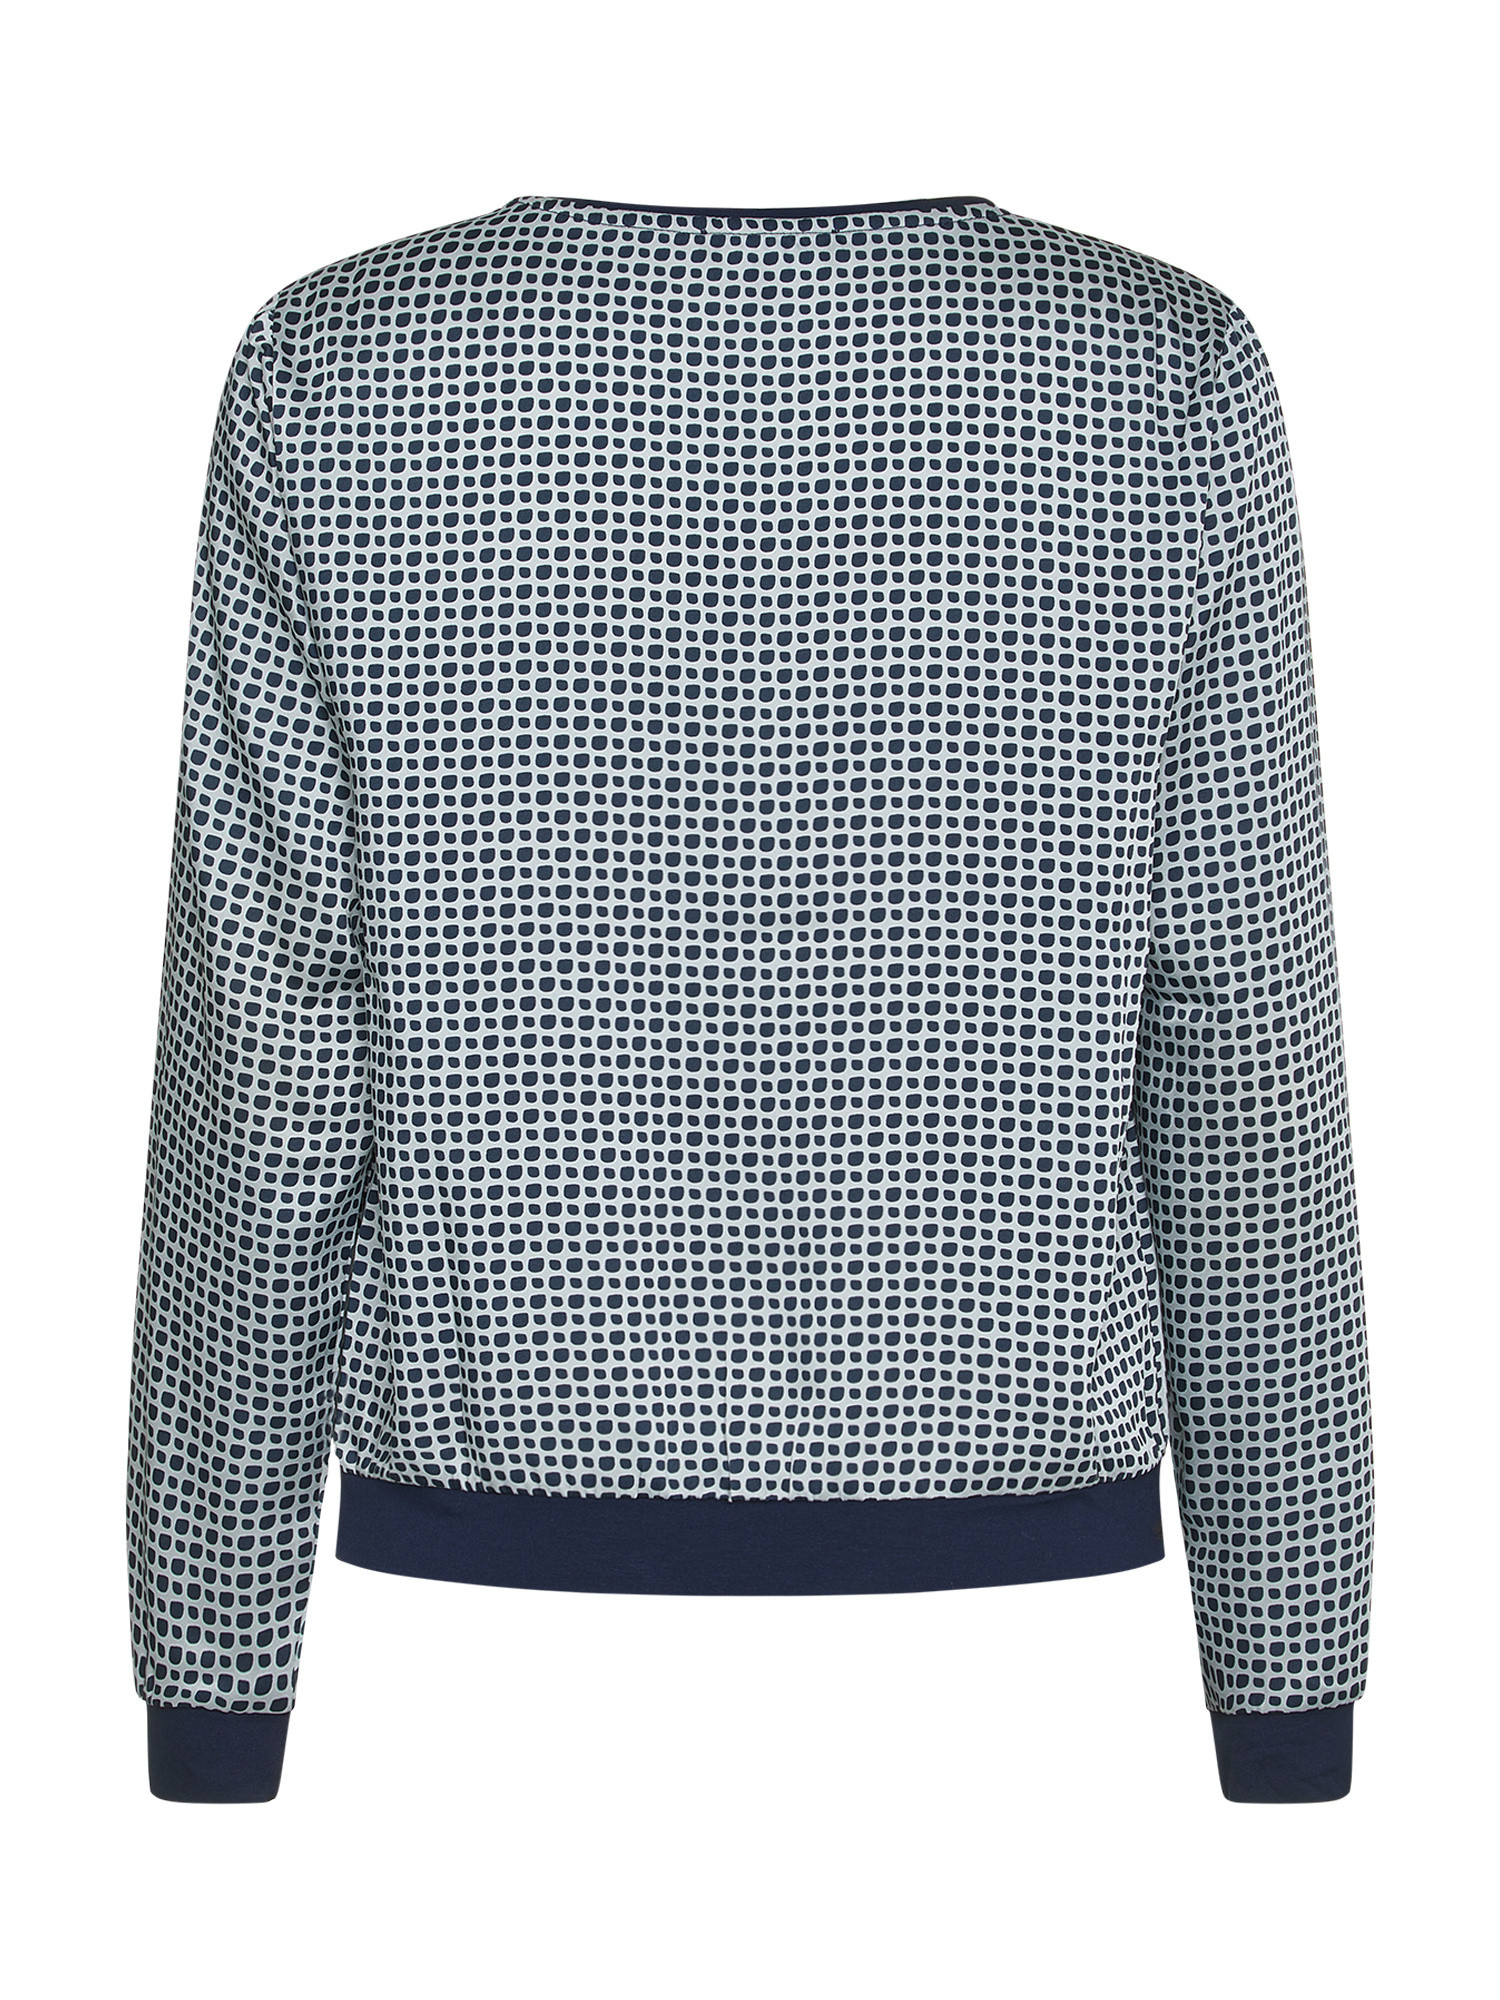 Koan - Patterned blouse, Pearl Grey, large image number 1